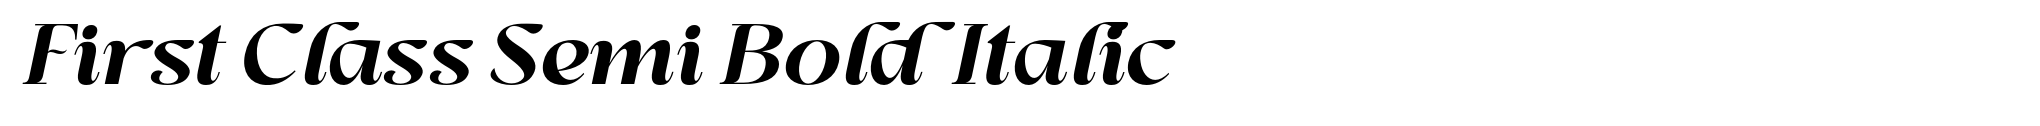 First Class Semi Bold Italic image